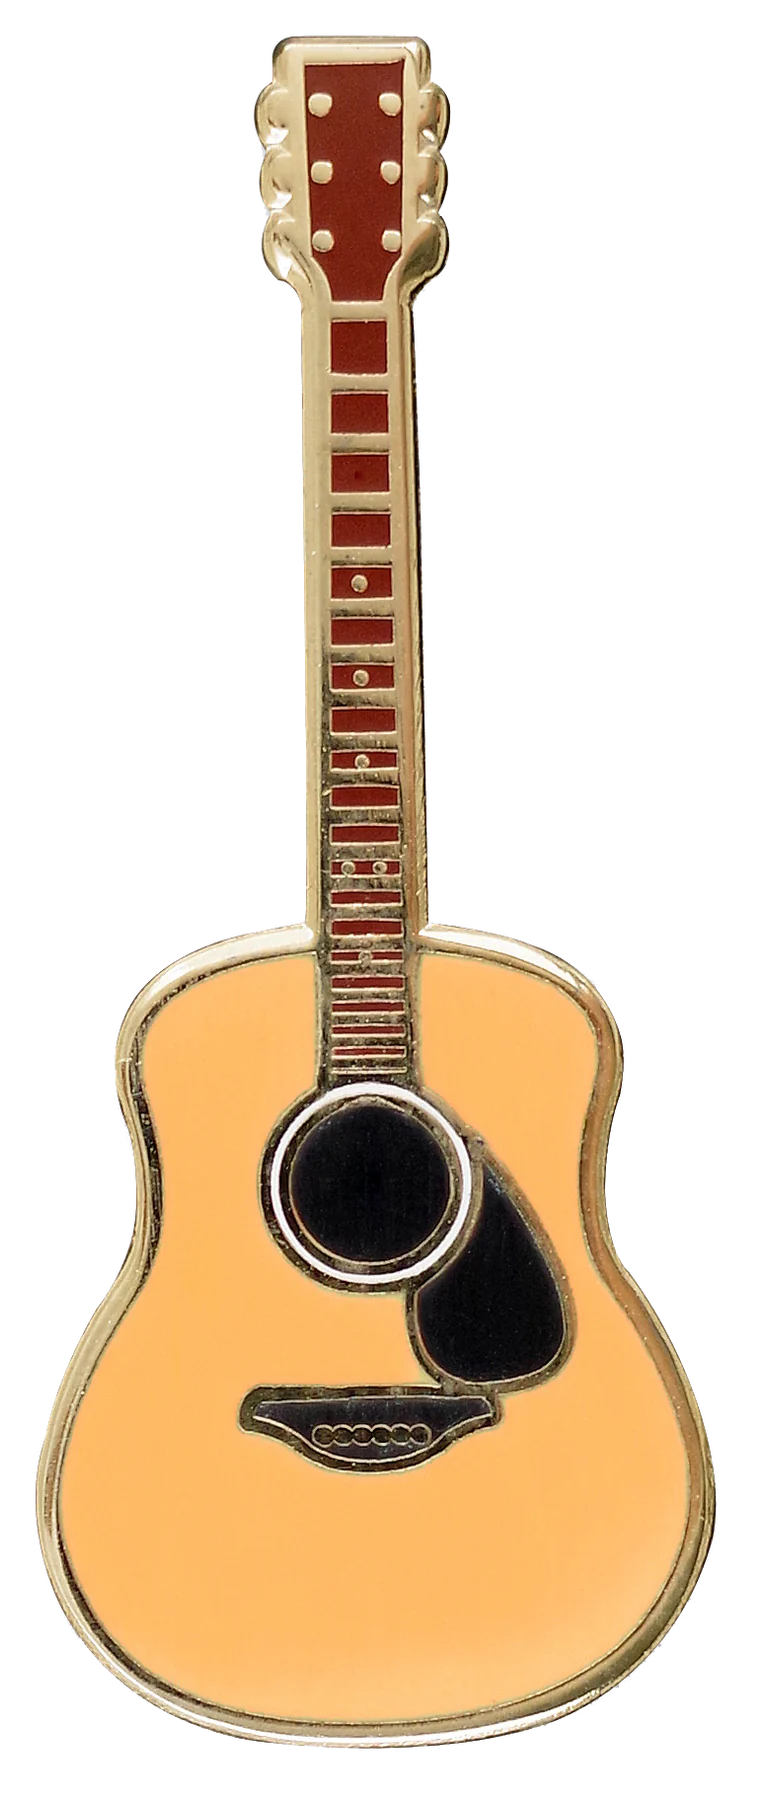 Beige acoustic guitar pin